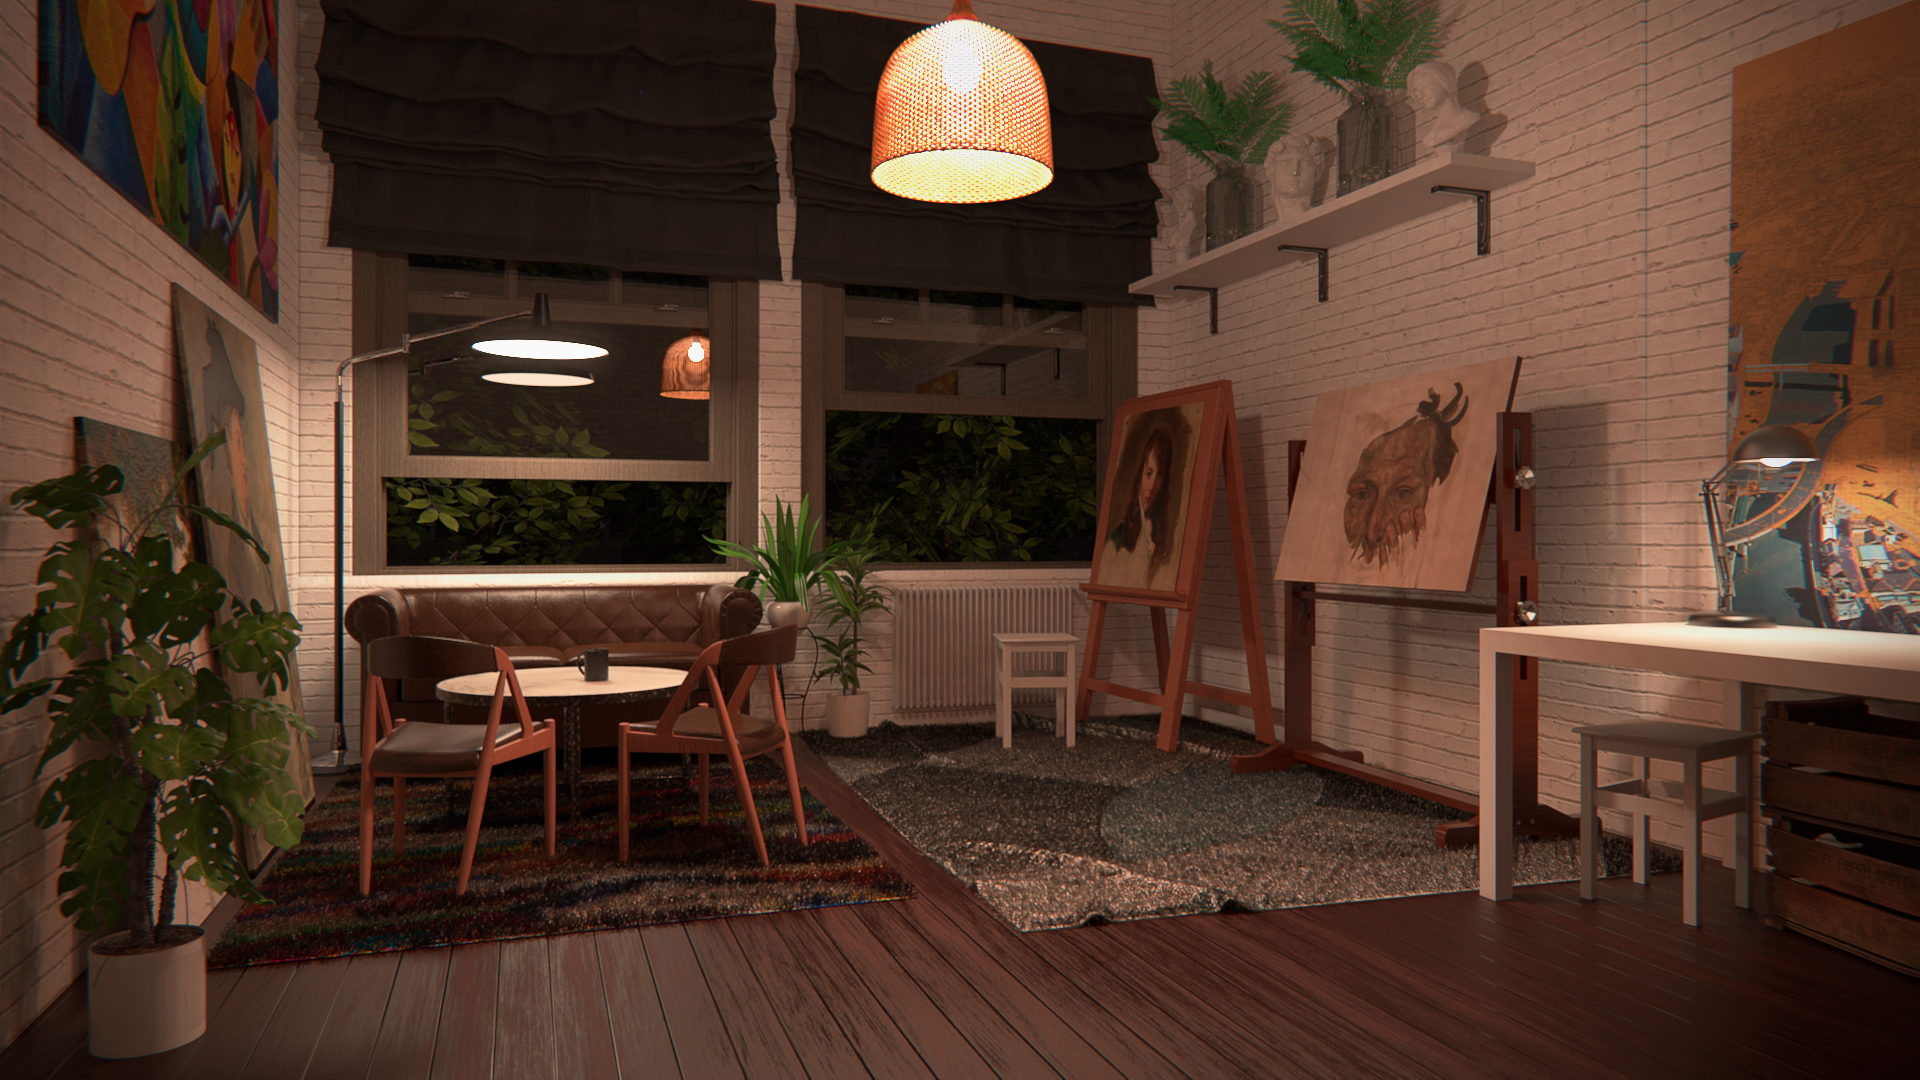 3D CGi Digital Art Interior Interior Design Painters Room Bricks Night 1920x1080